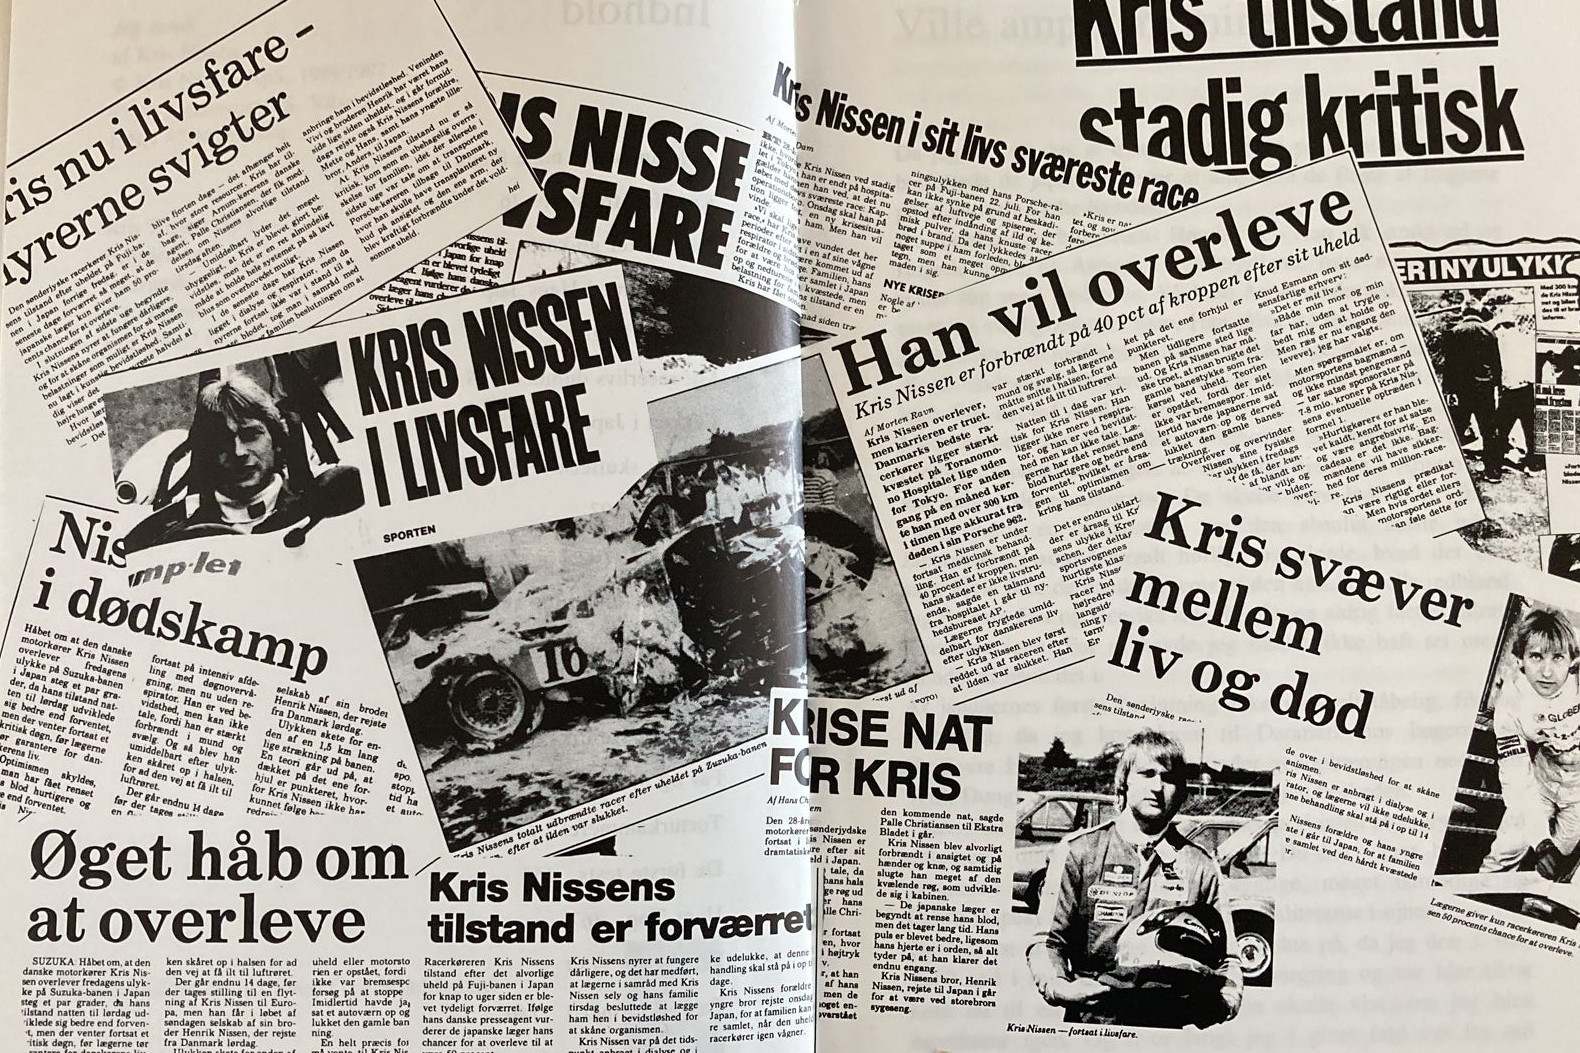 Press coverage of Kris Nissen's 1988 Fuji sports car crash